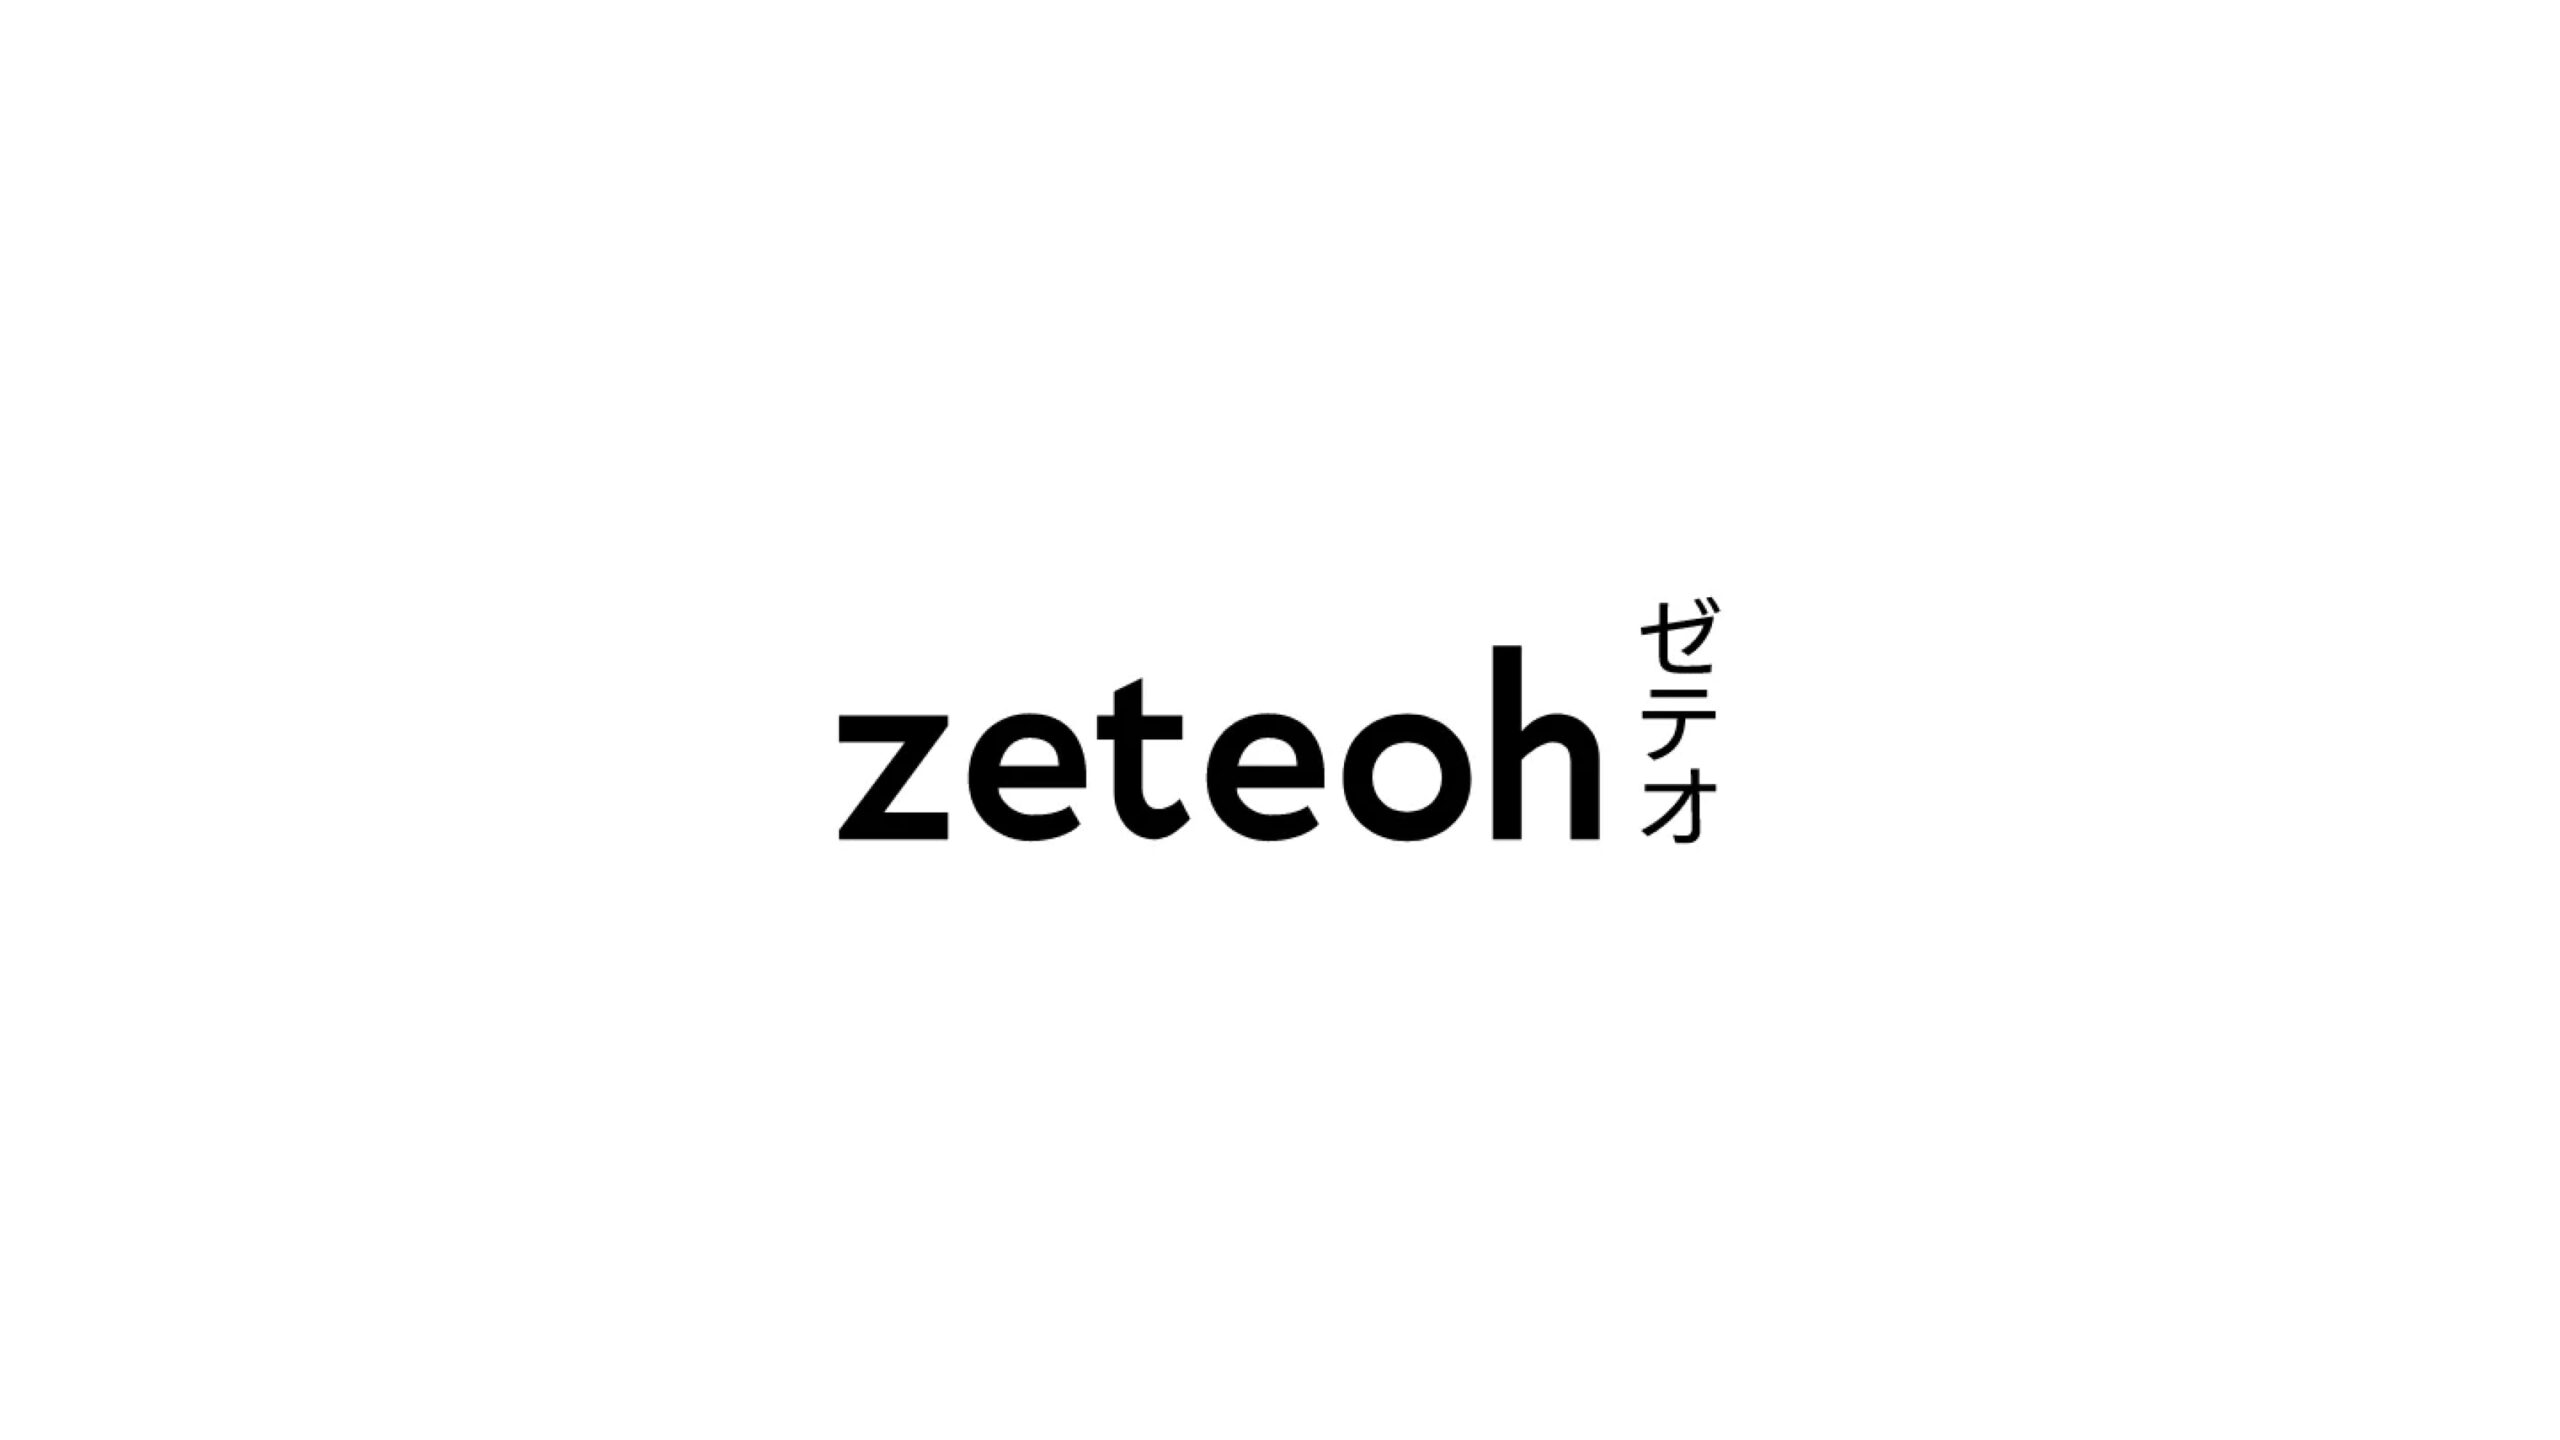 zeteoh株式会社がプレシードラウンドにて資金調達を実施